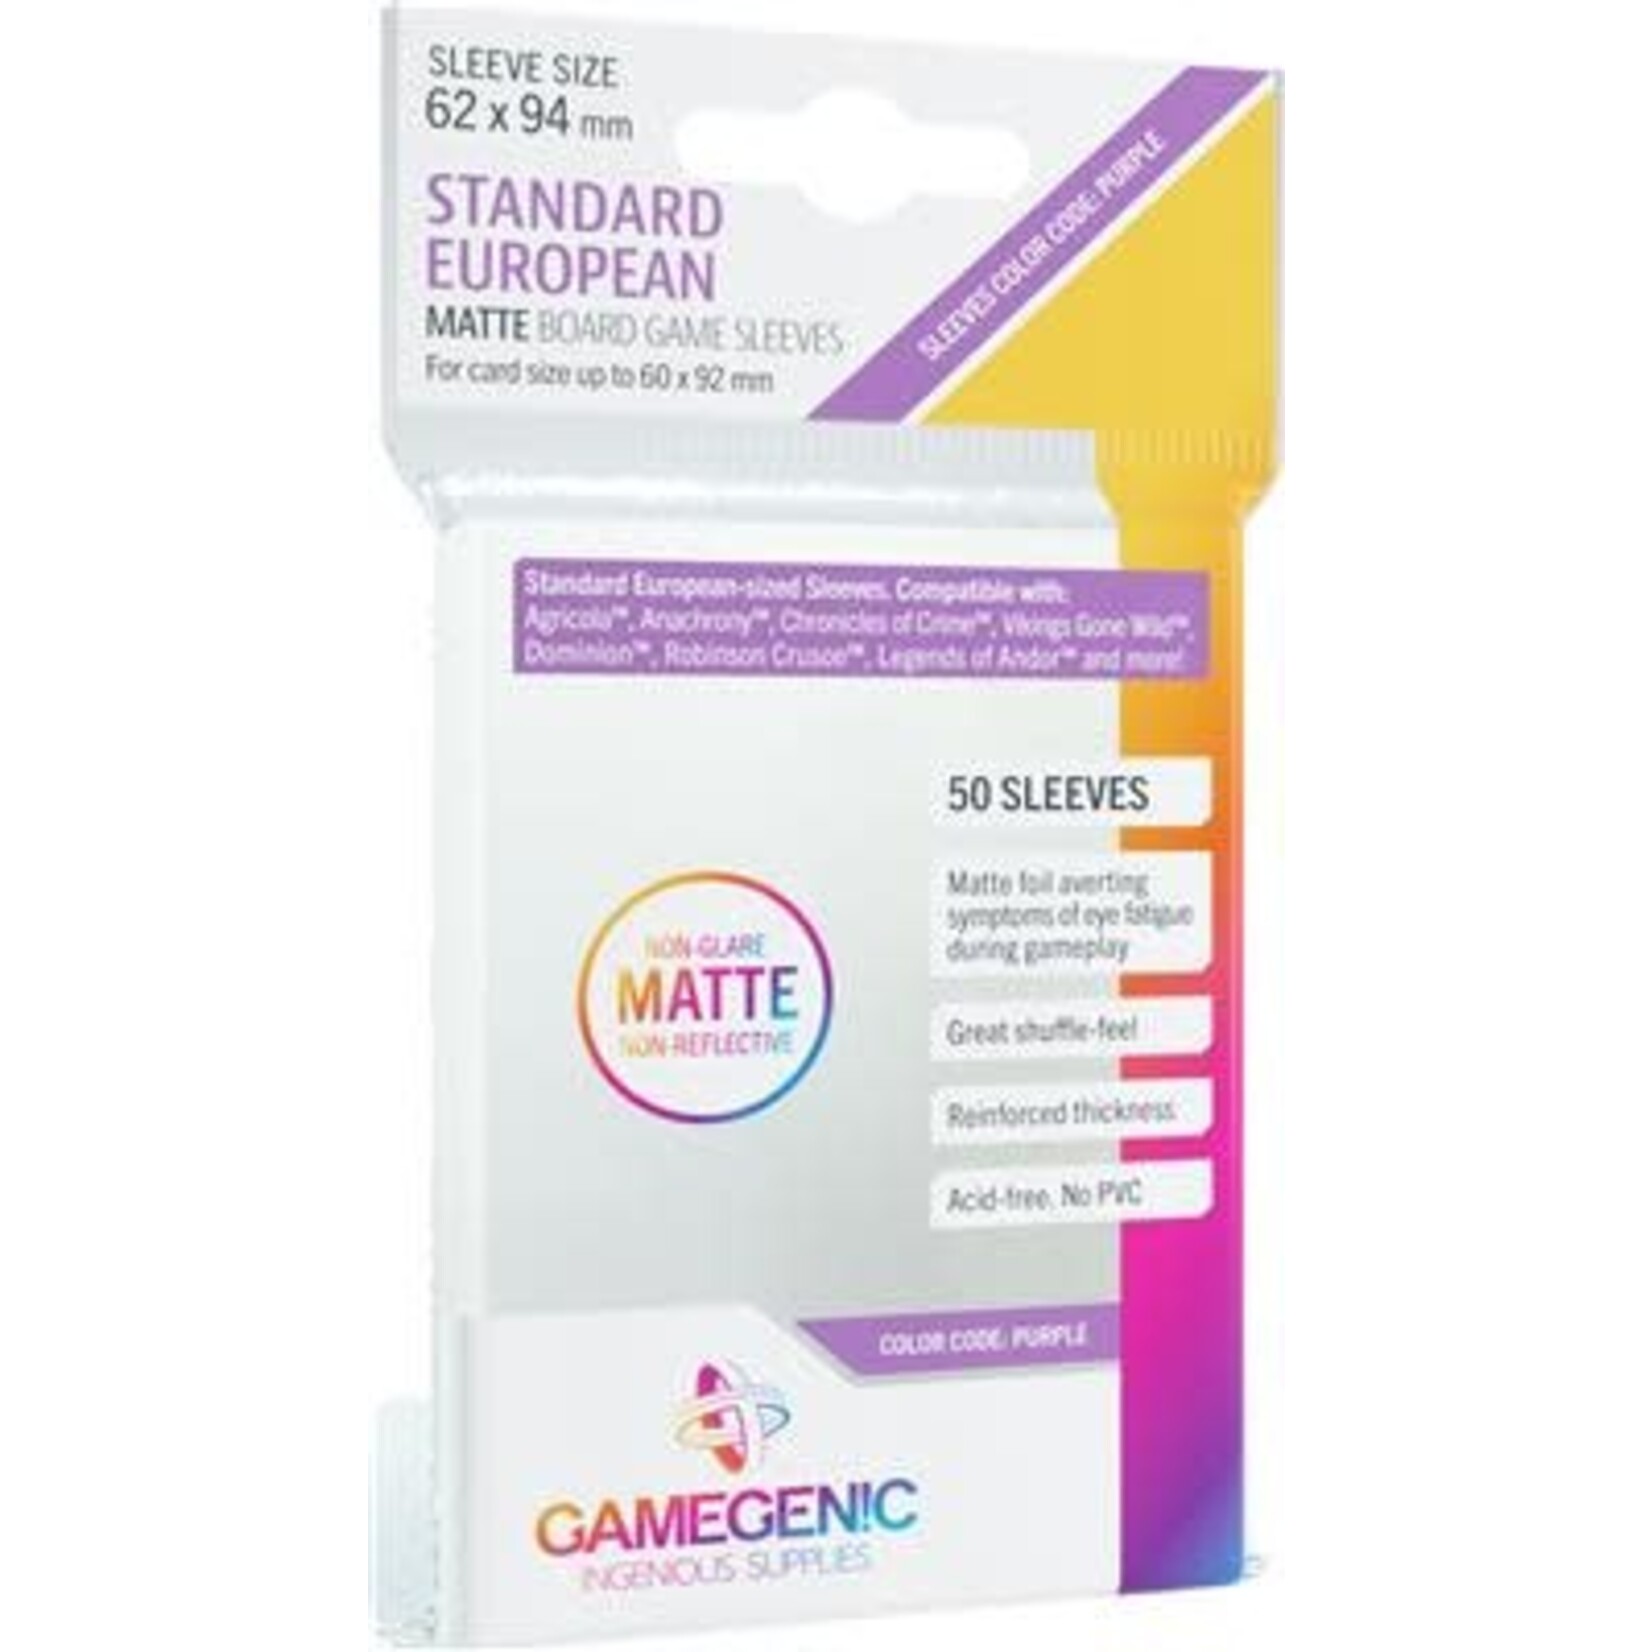 Gamegenic Board Game Sleeves - Standard European (62 x 94) Matte